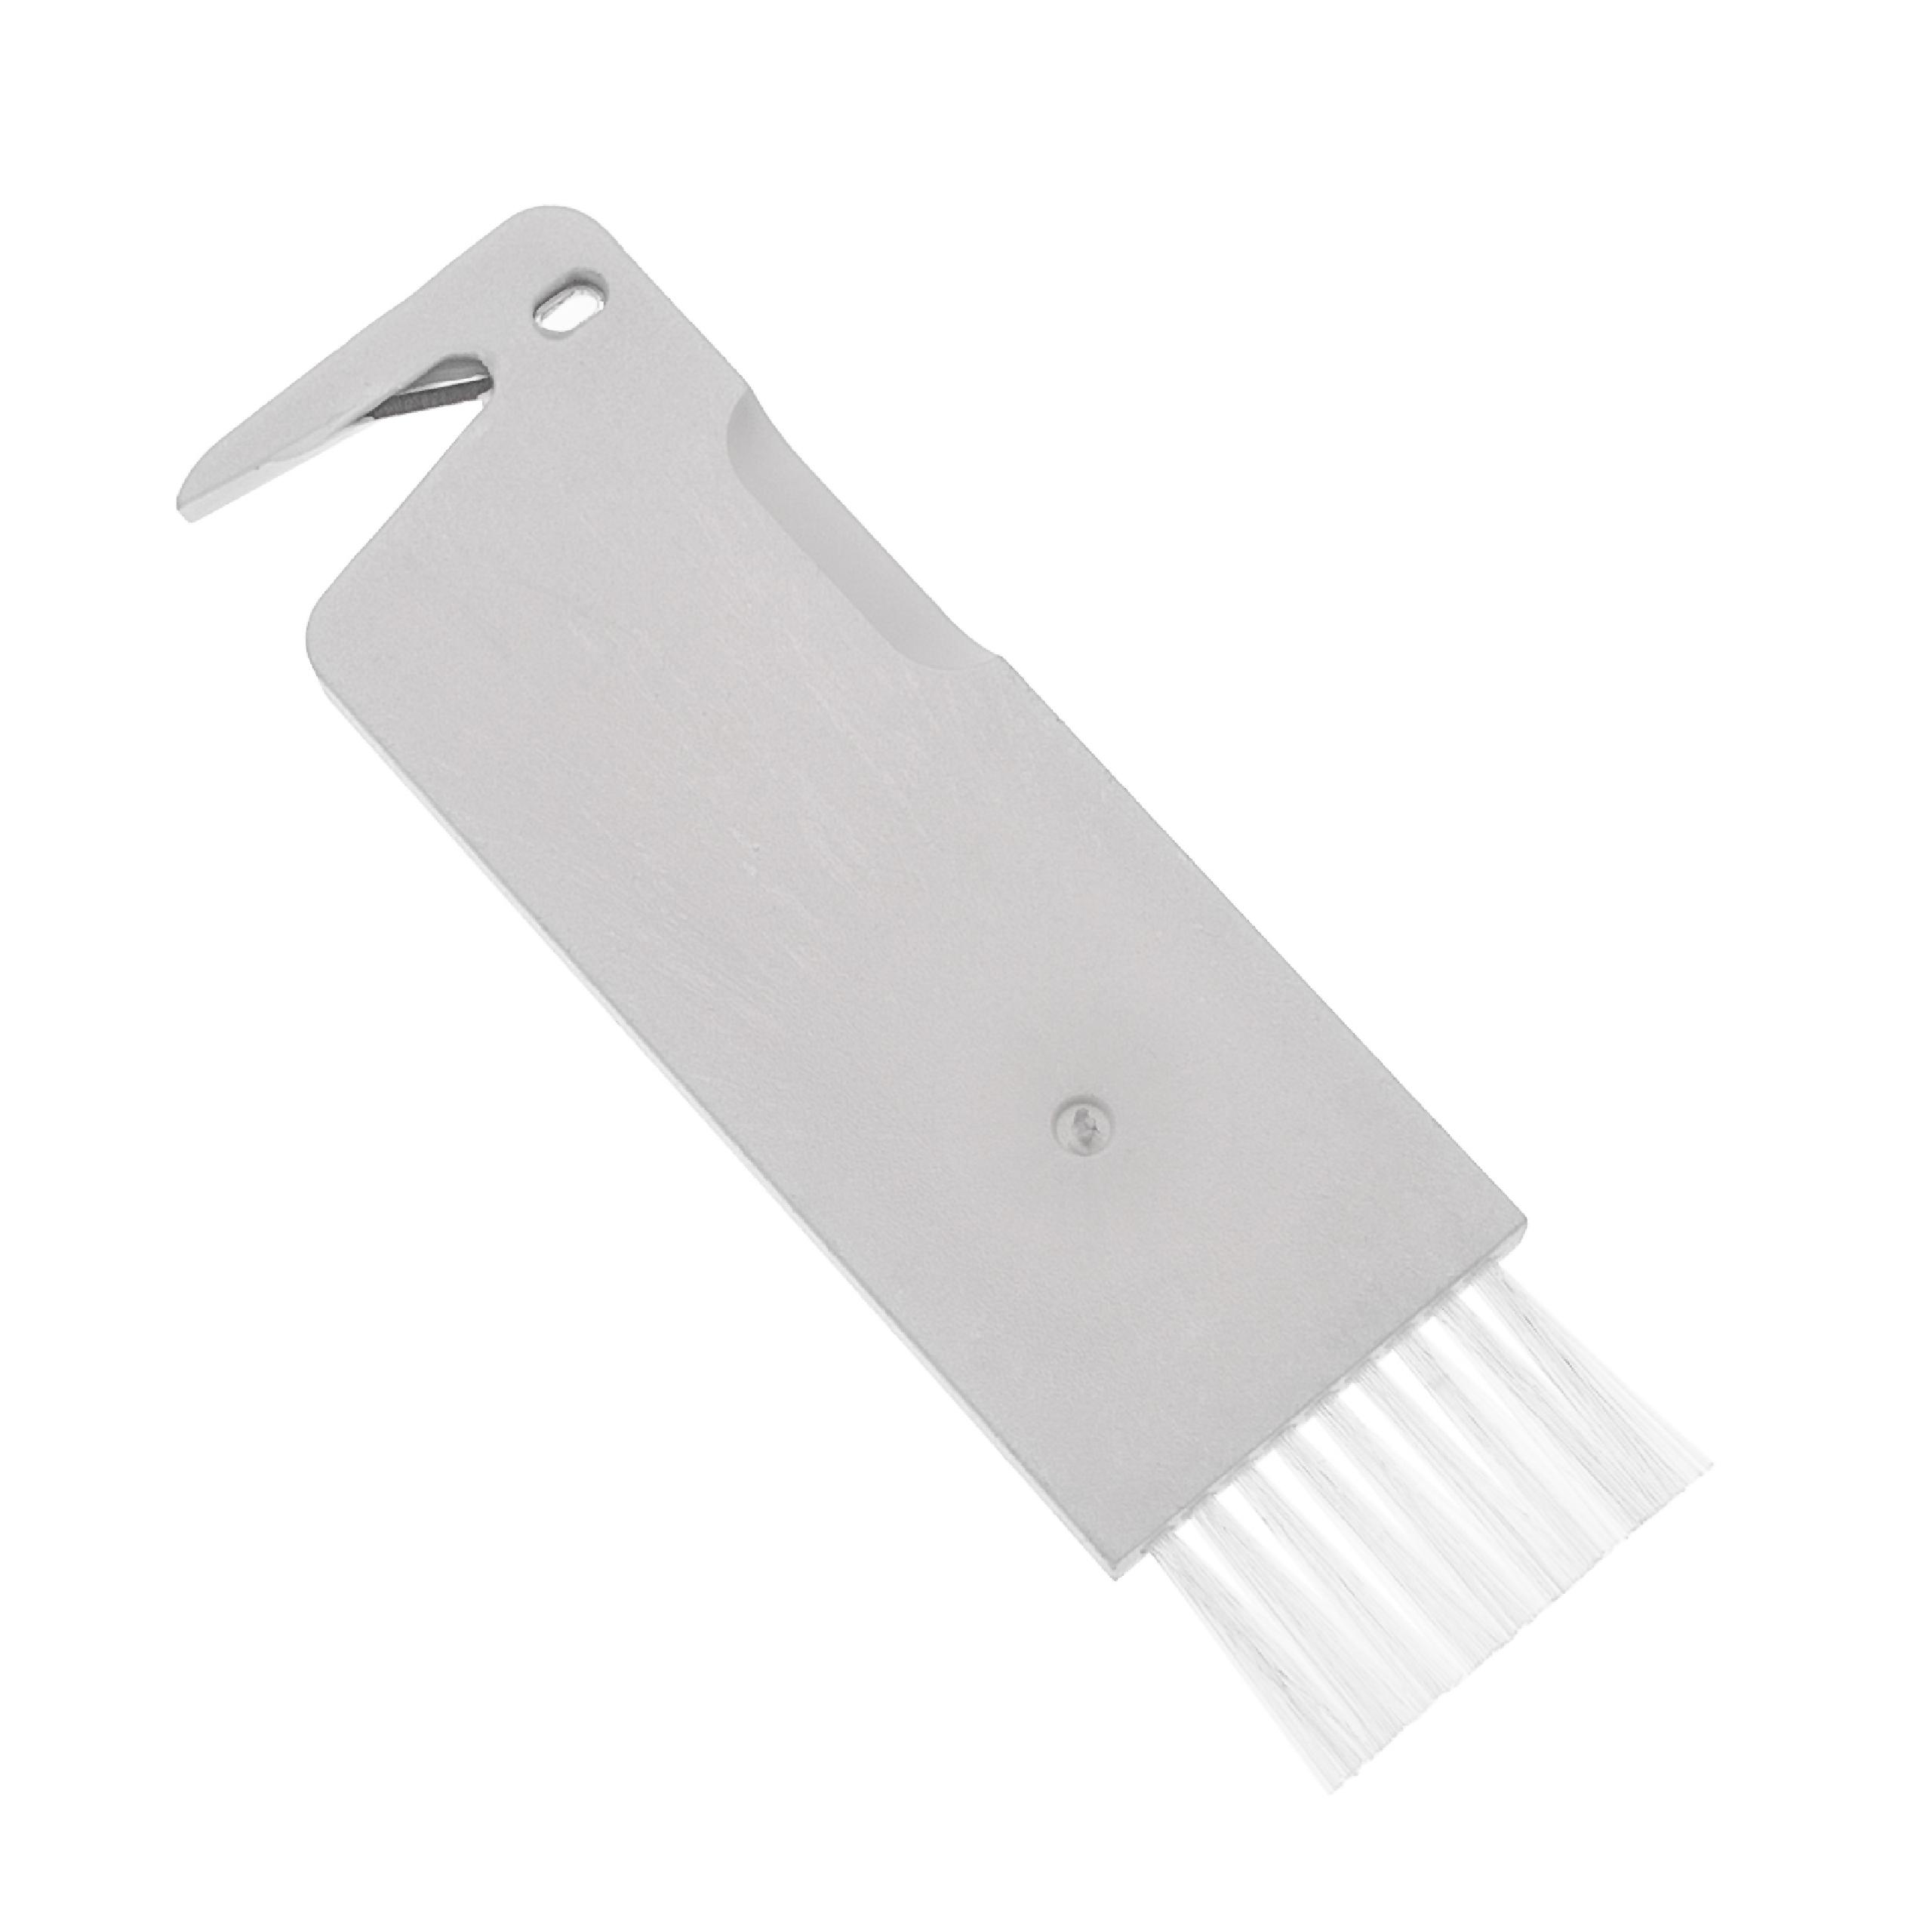 Cleaning Brush suitable for S50 Xiaomi Roborock S50 vacuum cleaning robot - white, plastic, 11.5 cm